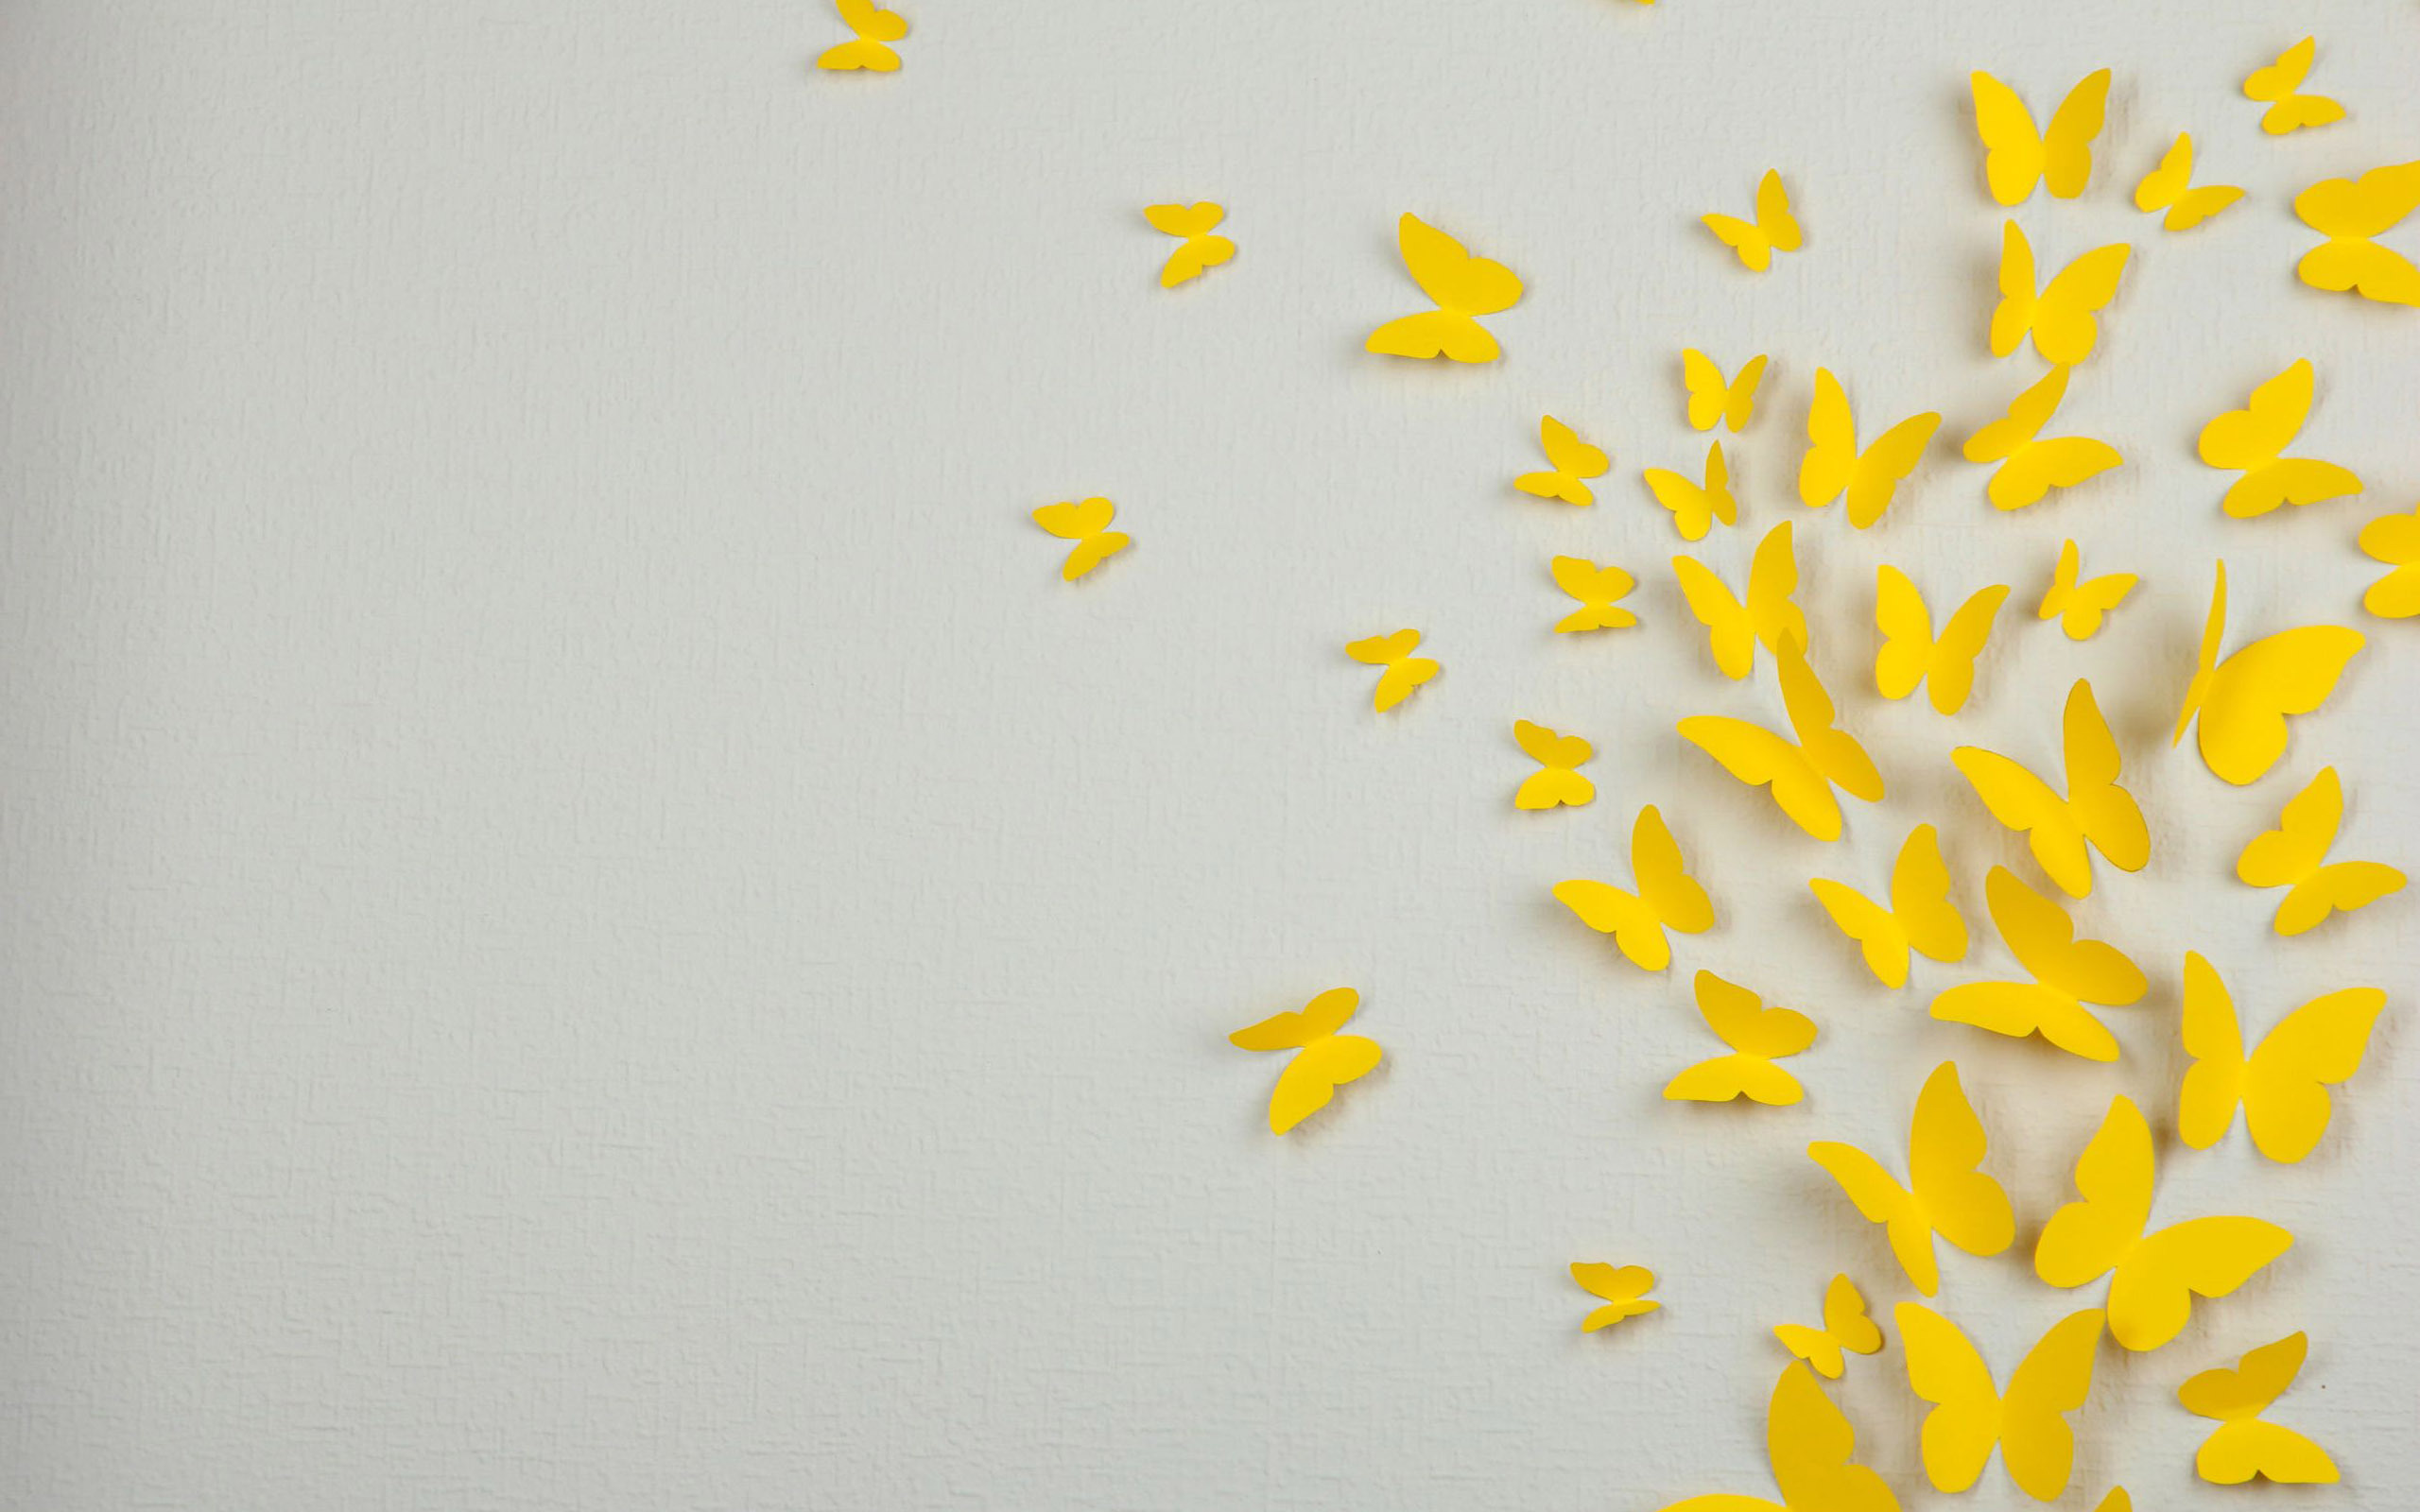 48+] Yellow and White Wallpaper - WallpaperSafari